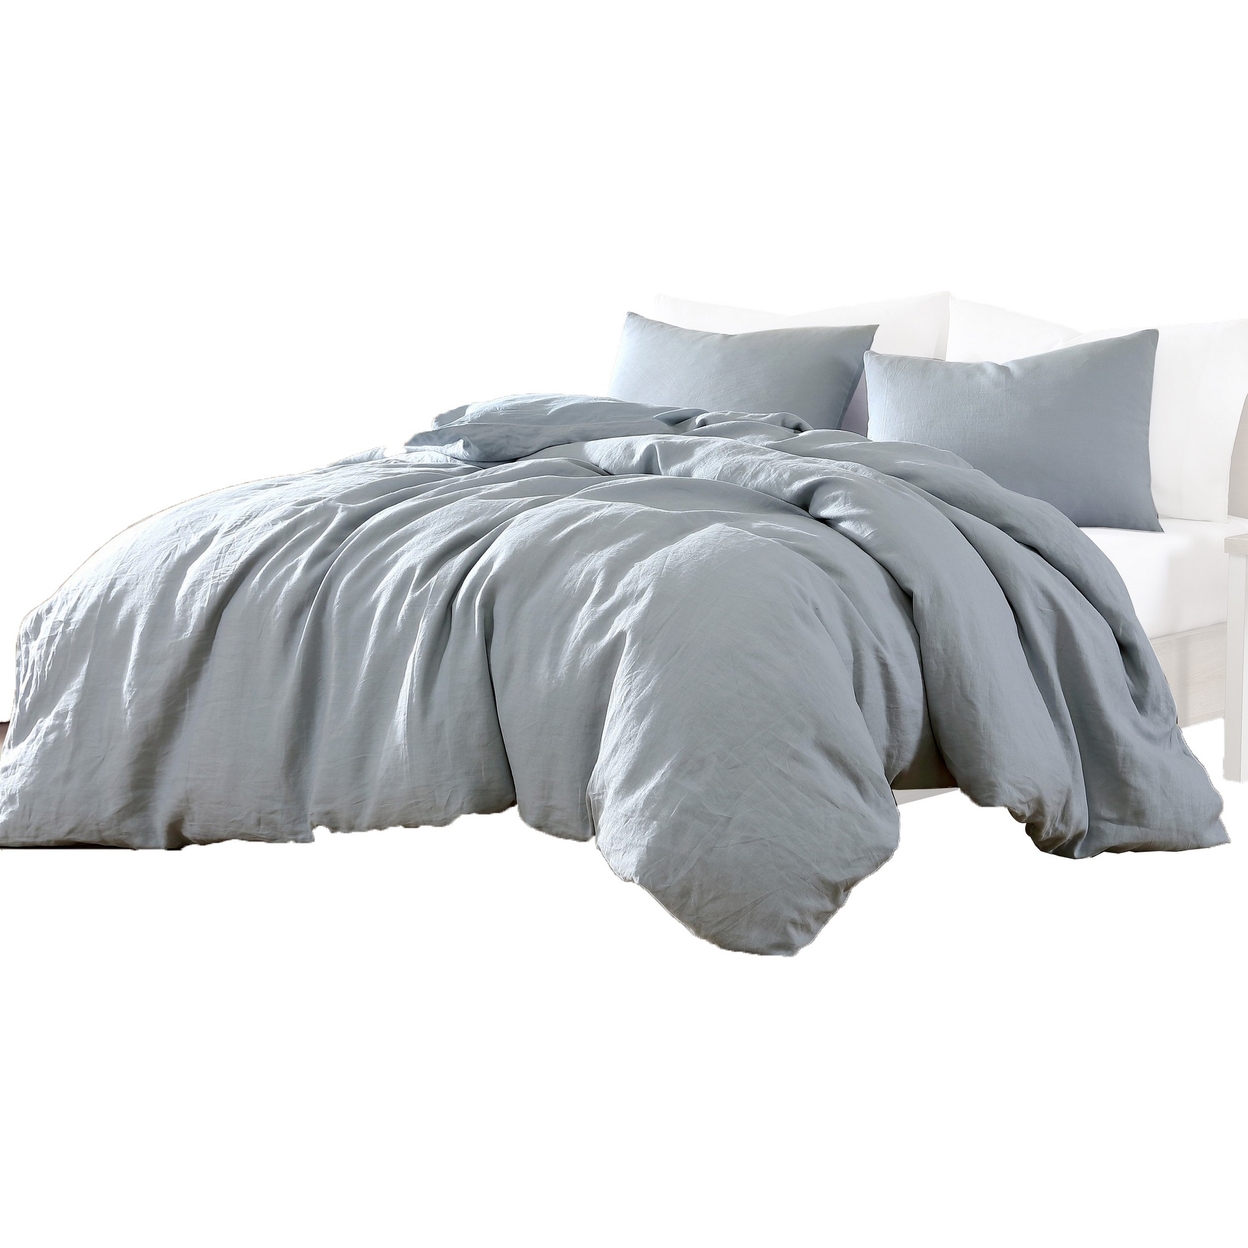 Edge 4 Piece King Size Duvet Comforter Set, Washed Linen, Light Blue - Saltoro Sherpi